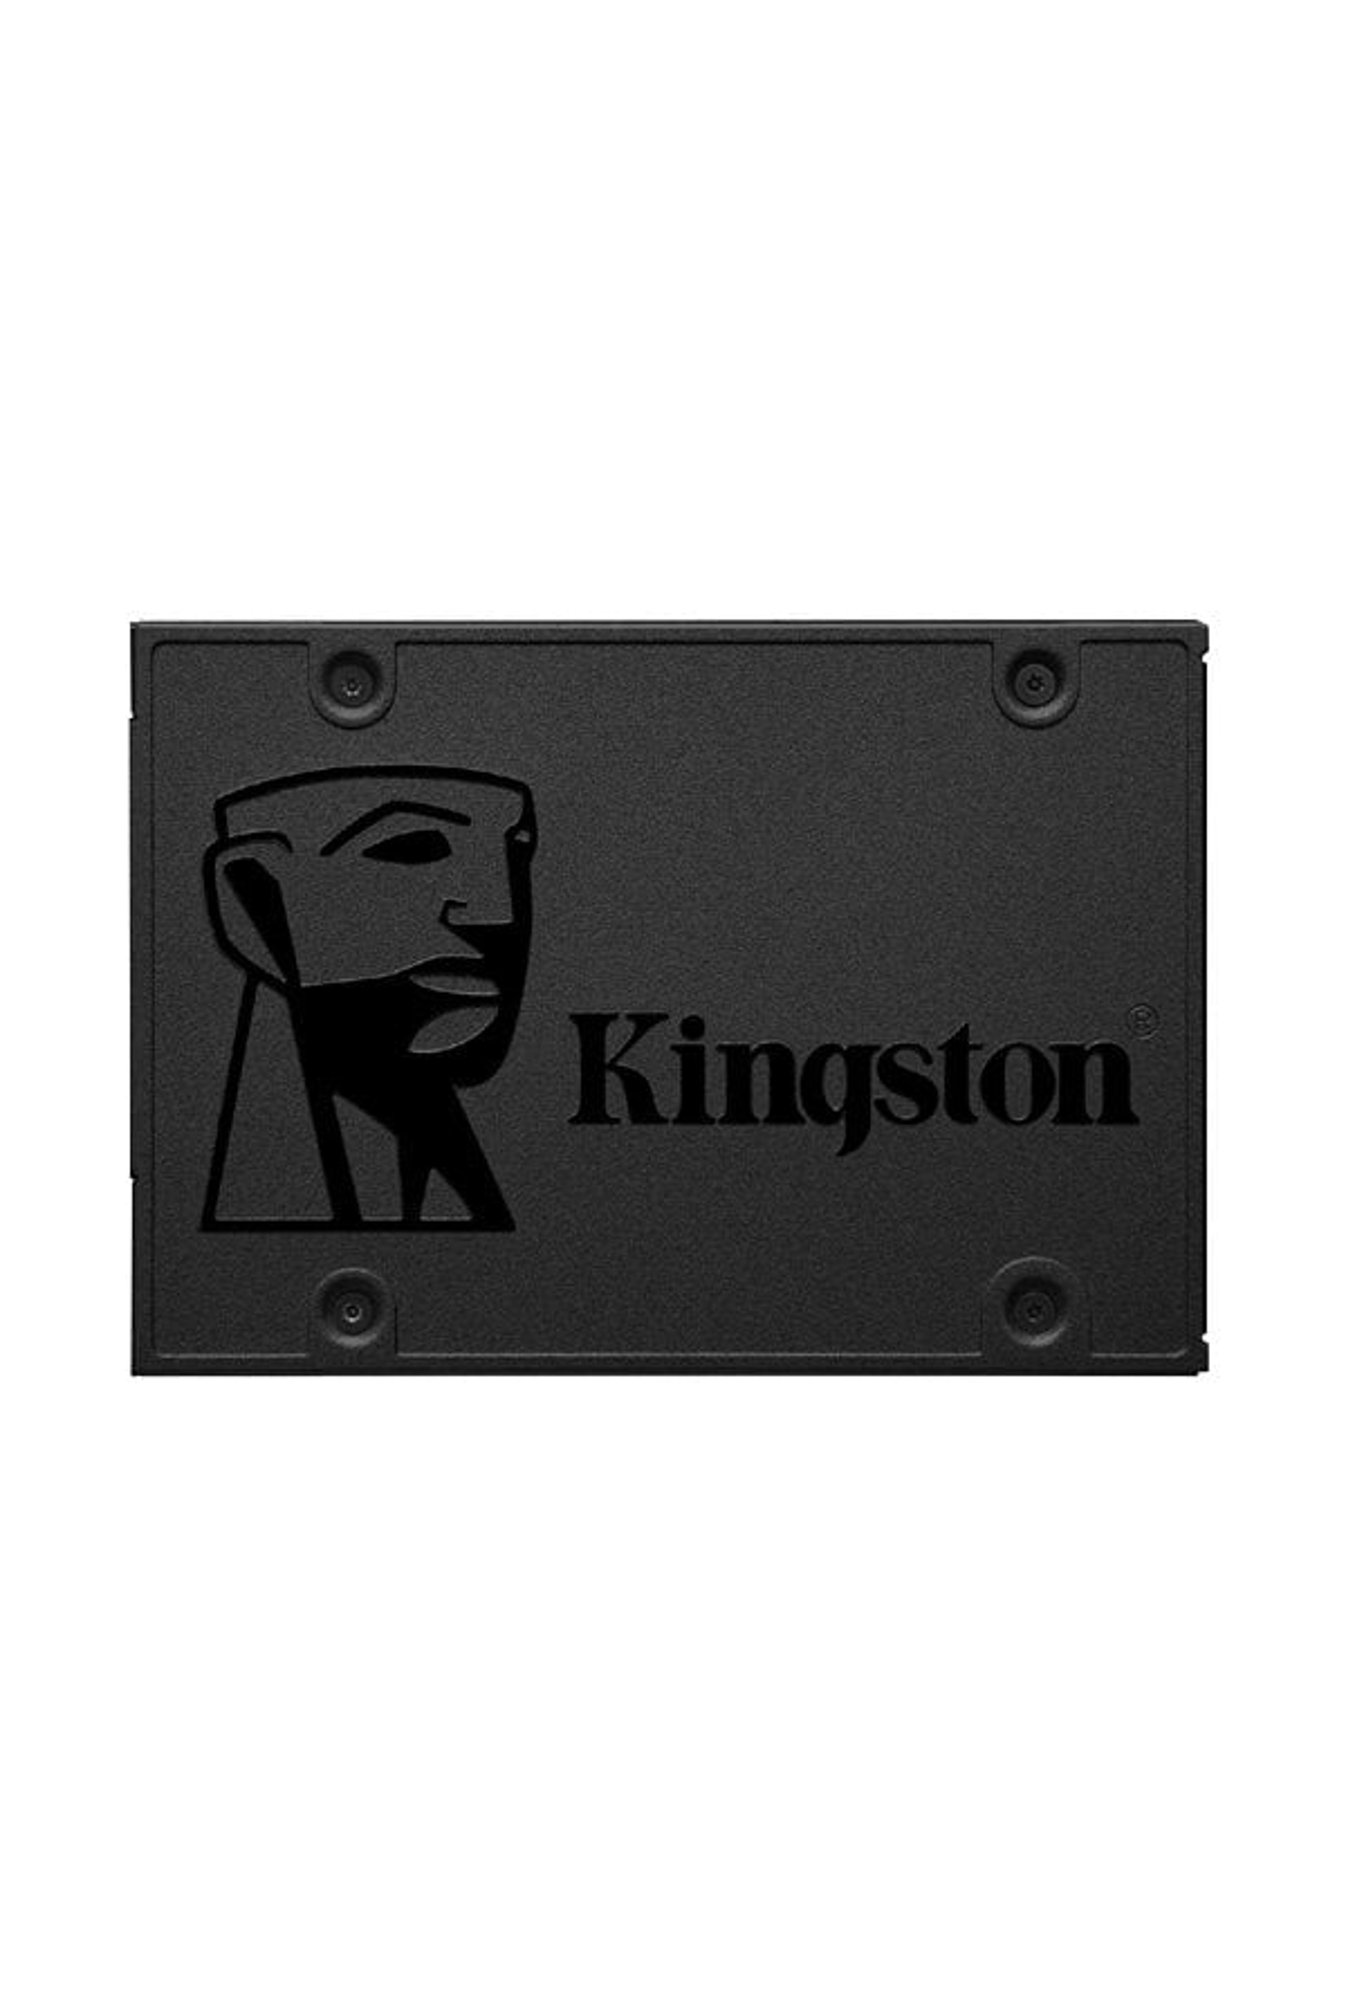 Kingston A400 SSD 240Go interne 2.2 SATA 6Gb/s